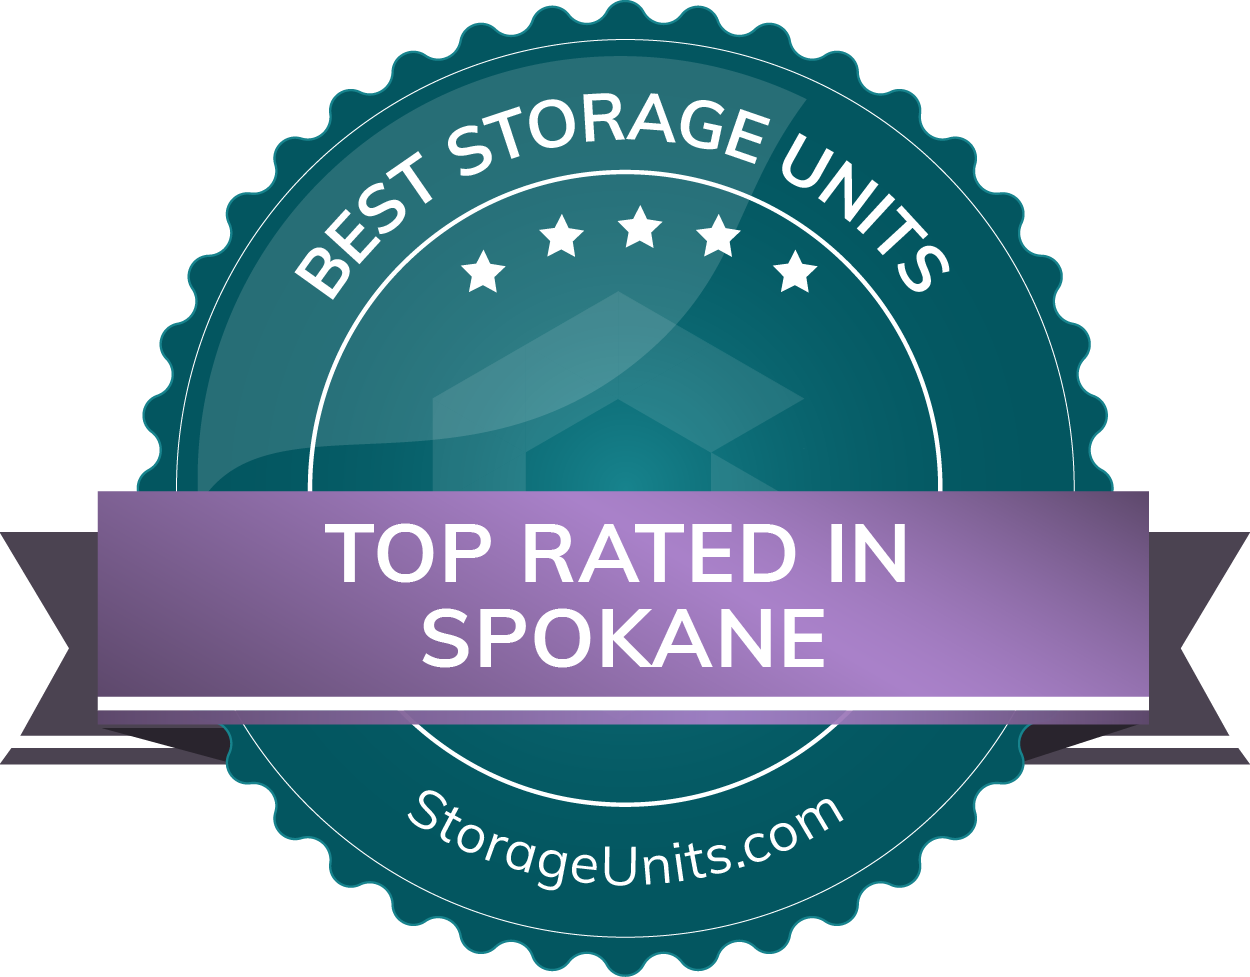 Best Self Storage Units in Spokane, Washington of 2022